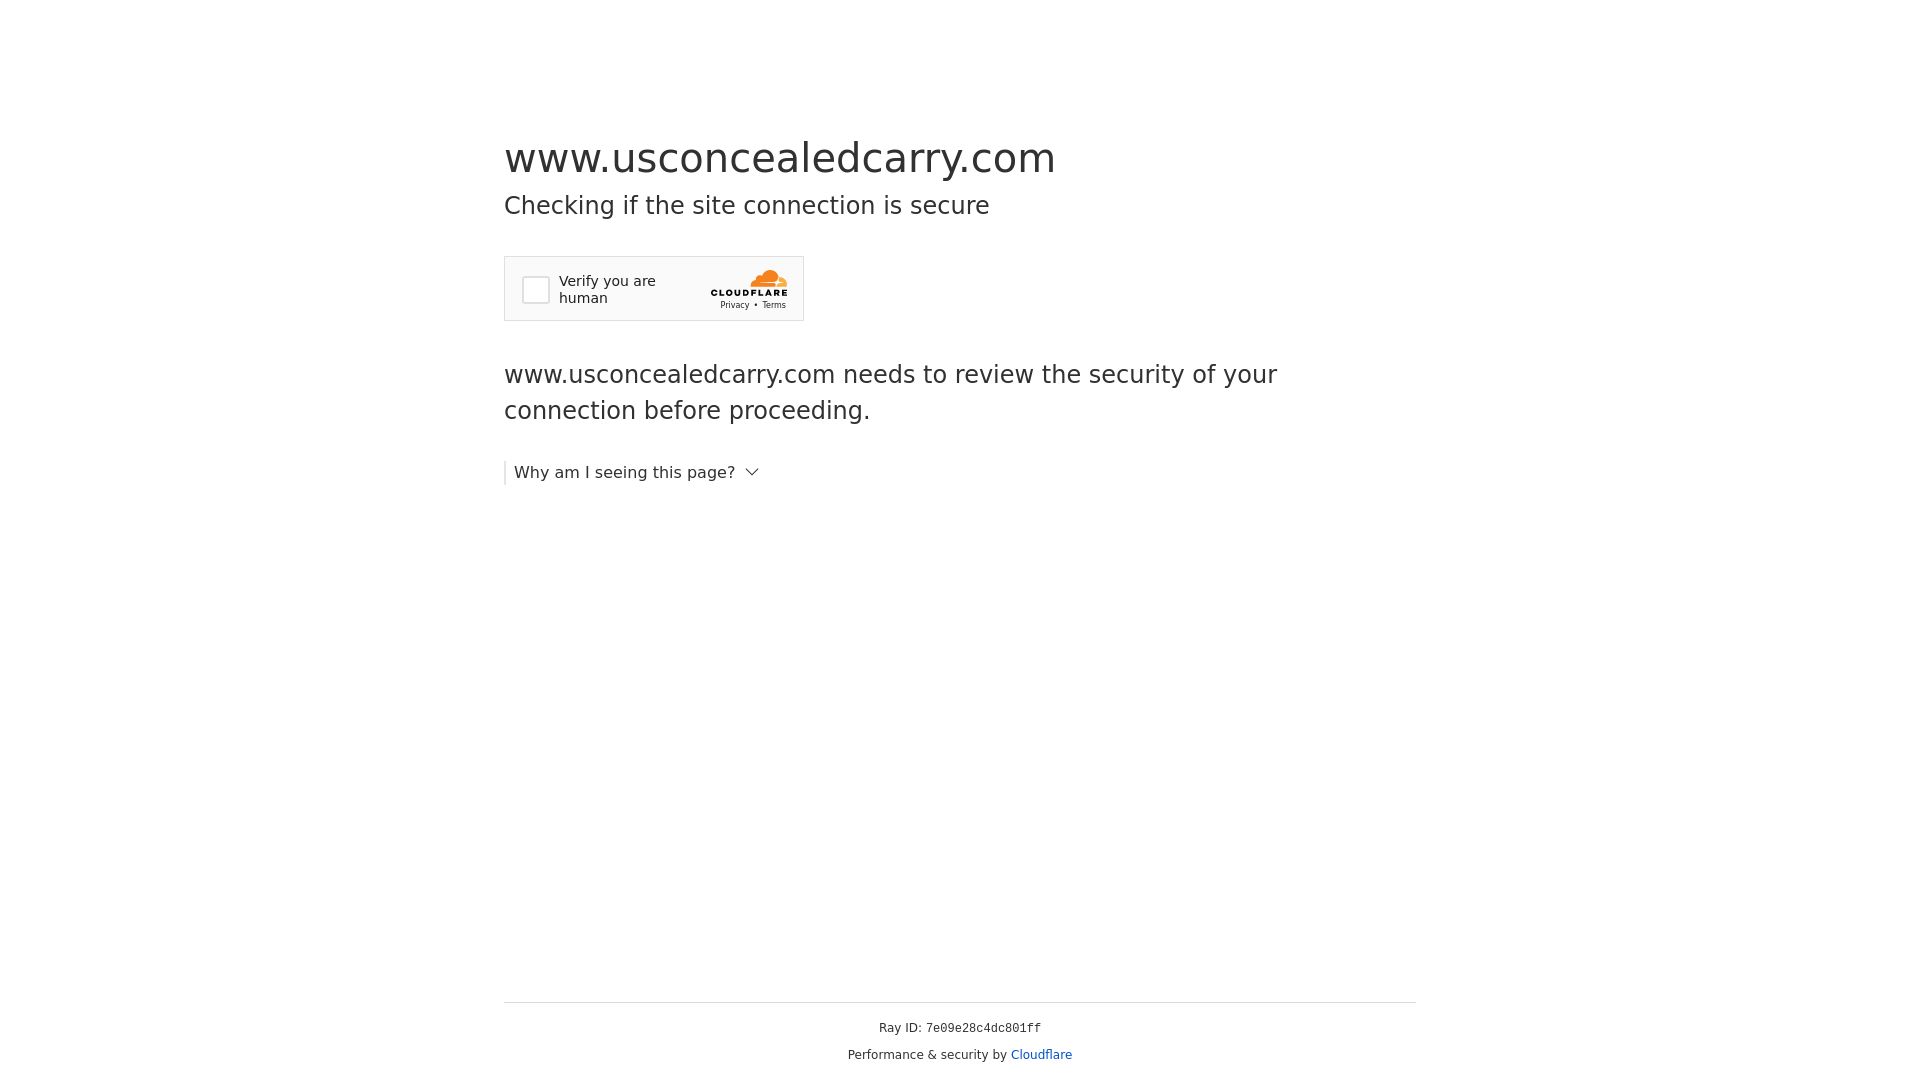 Website status usconcealedcarry.com is   ONLINE